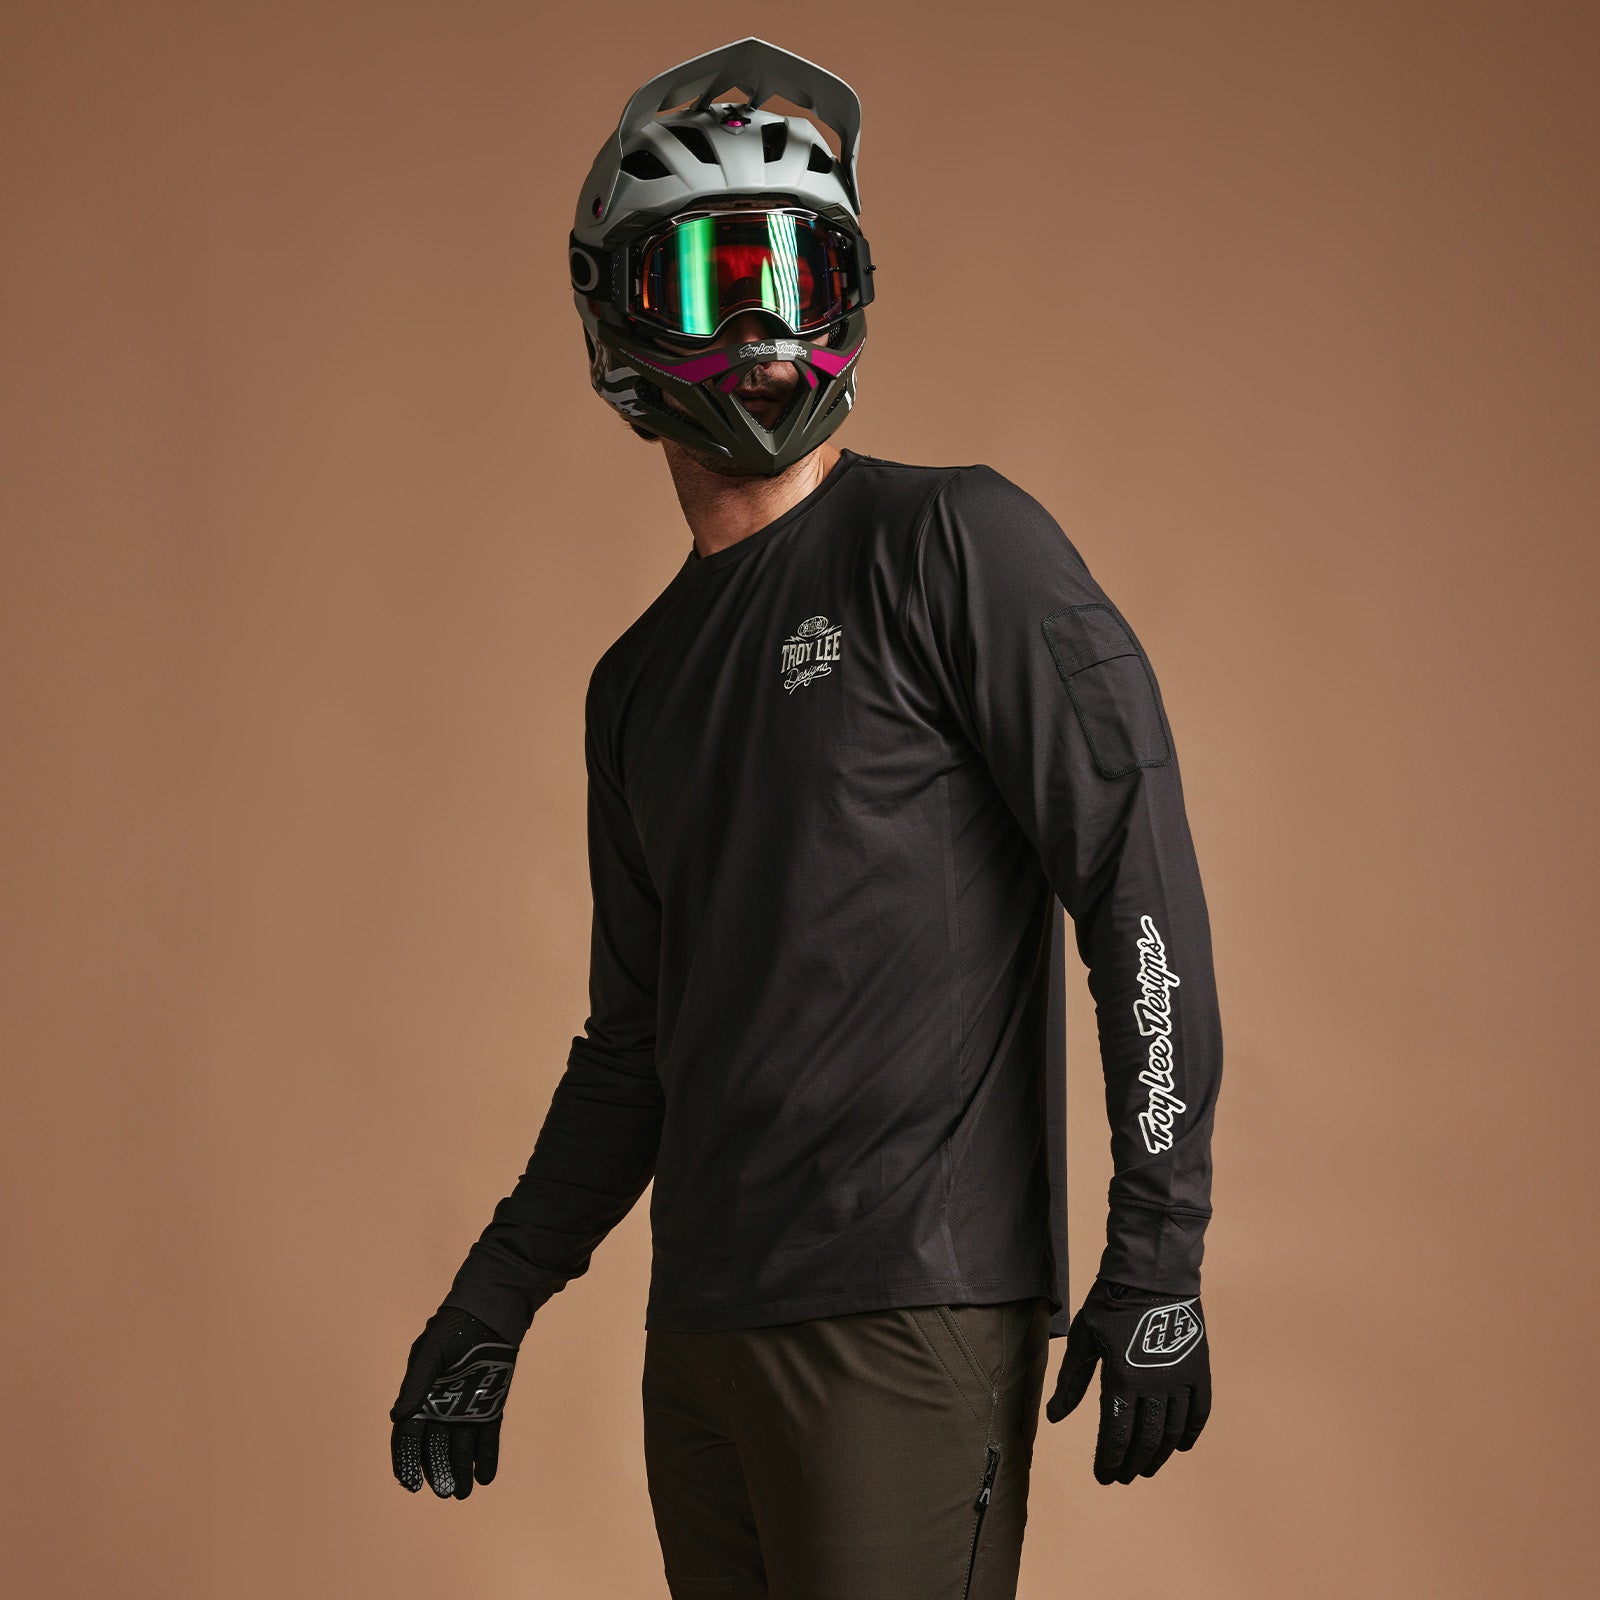 Troy Lee Designs body shot of mtb rider in Ruckus gear